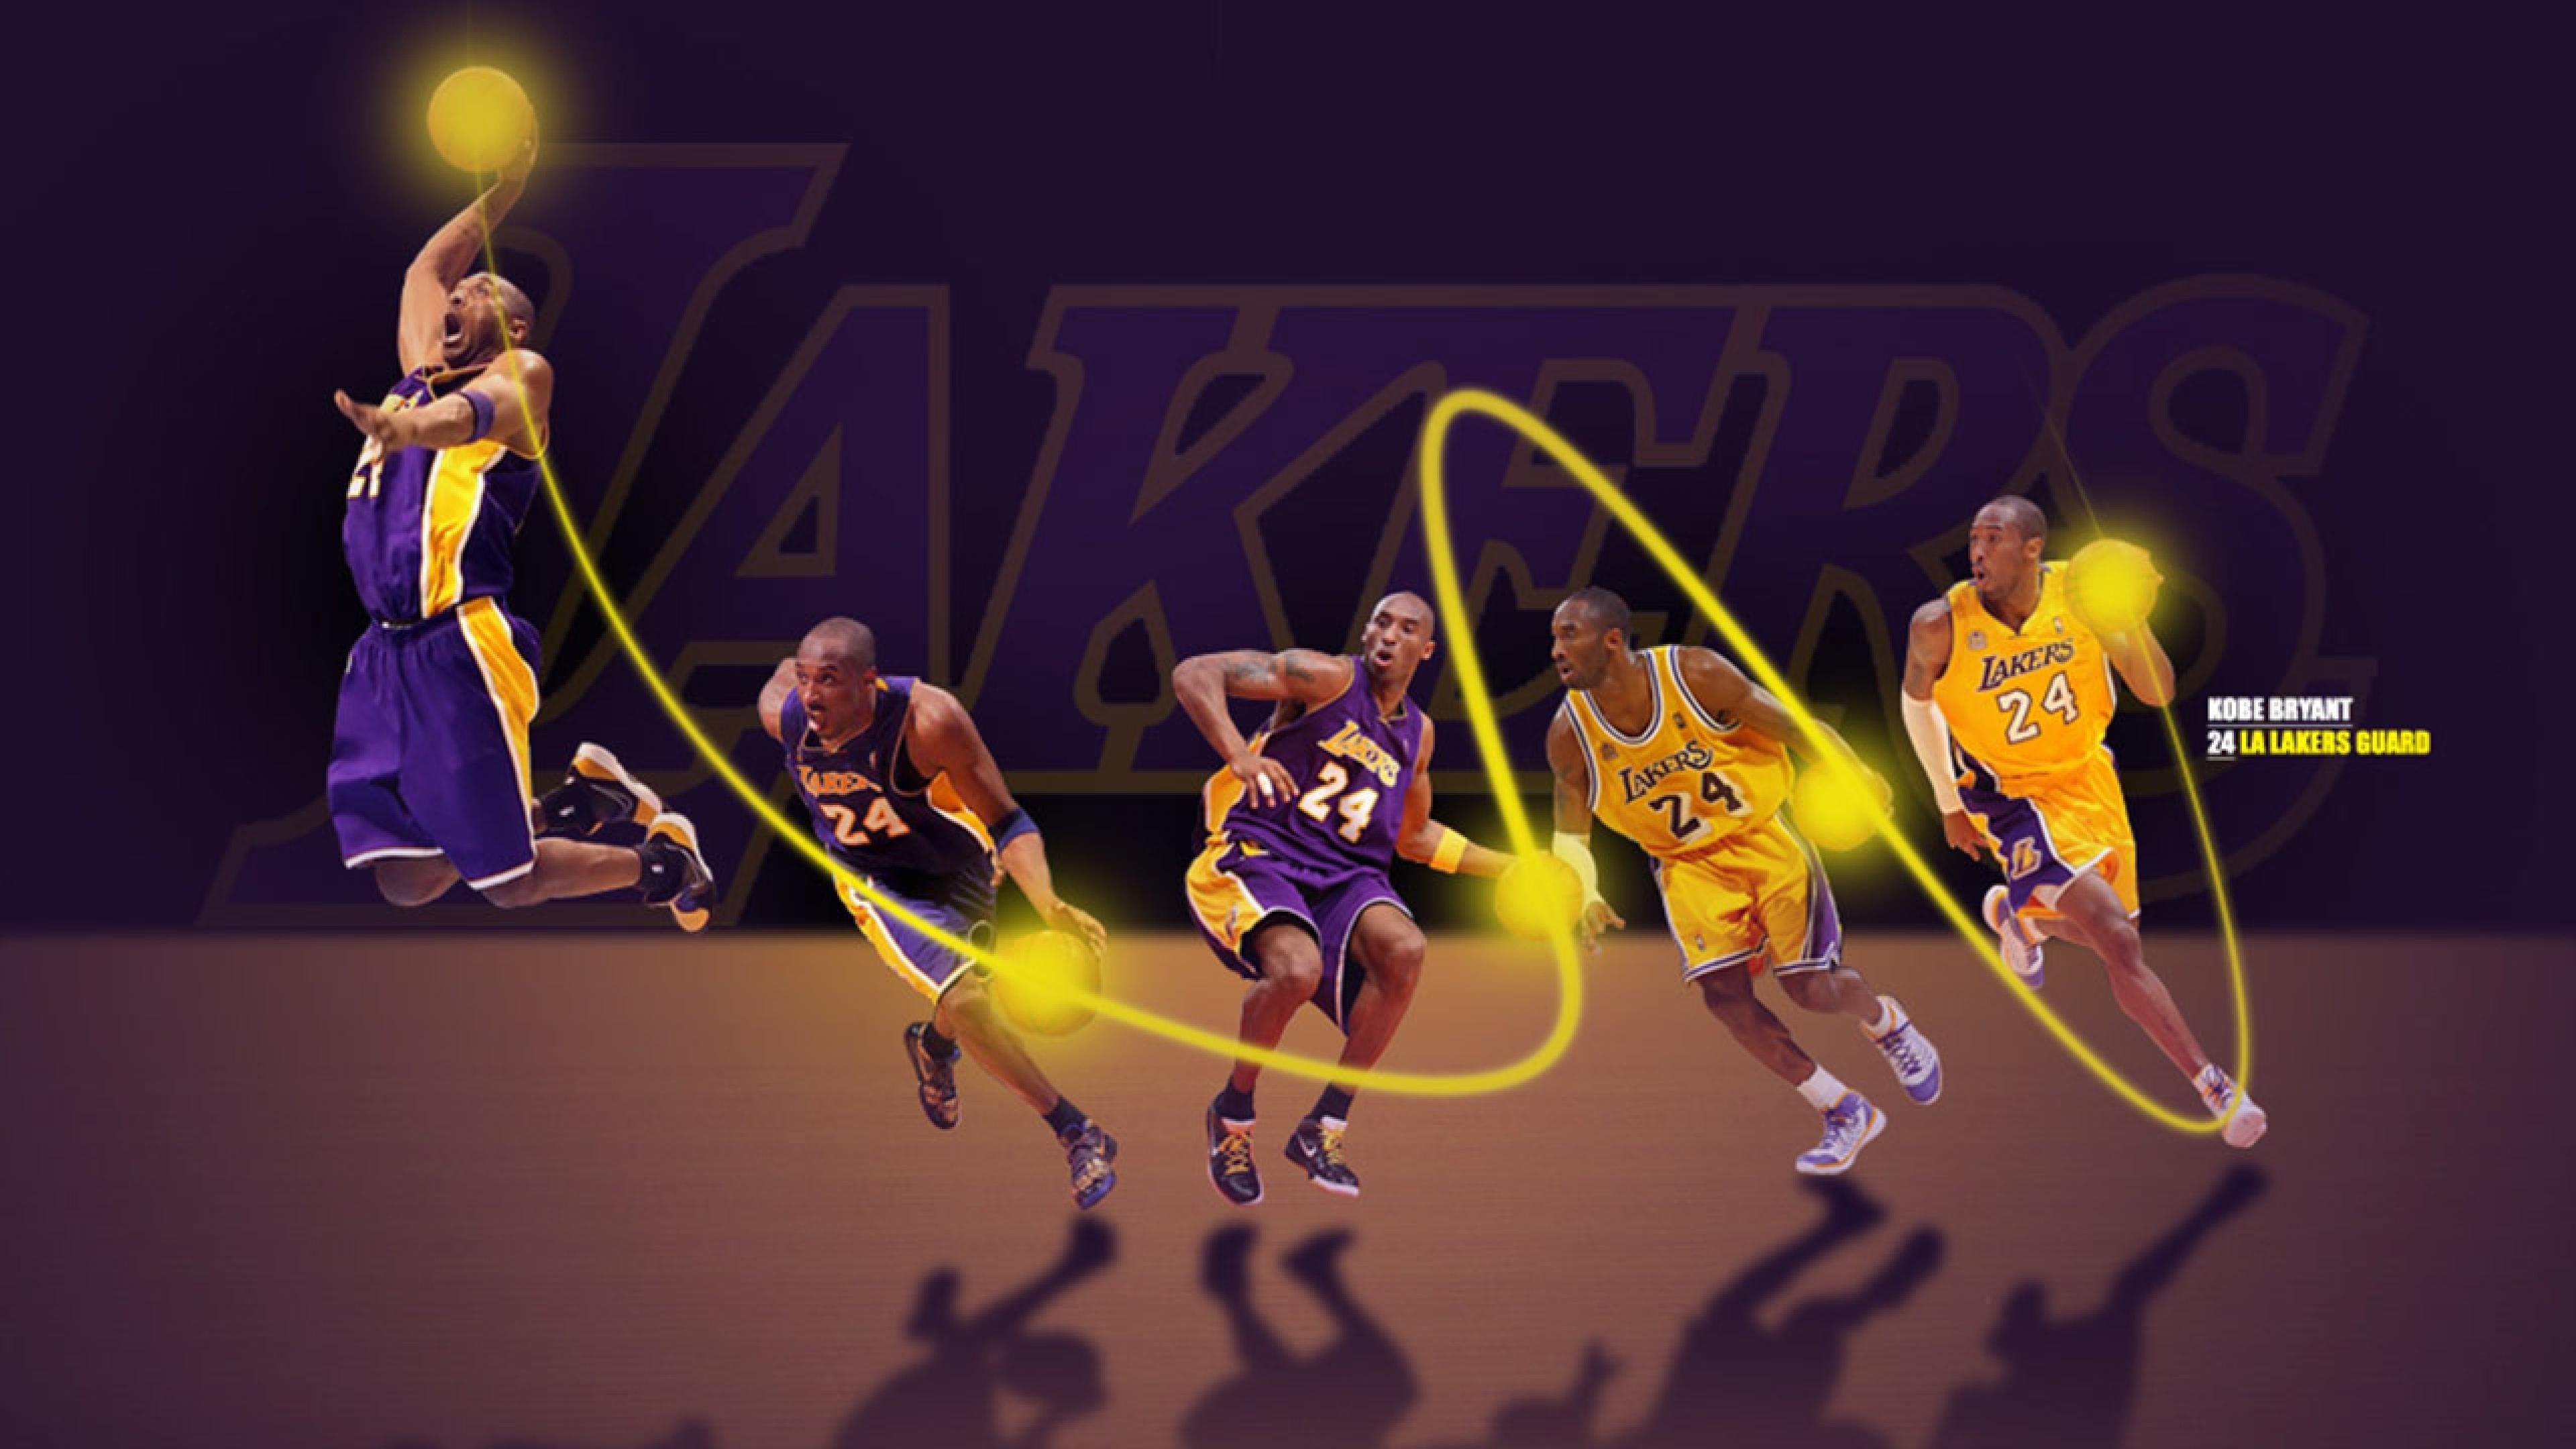 Los Angeles Lakers Wallpaper 9. Free Download HD Wallpaper 4k